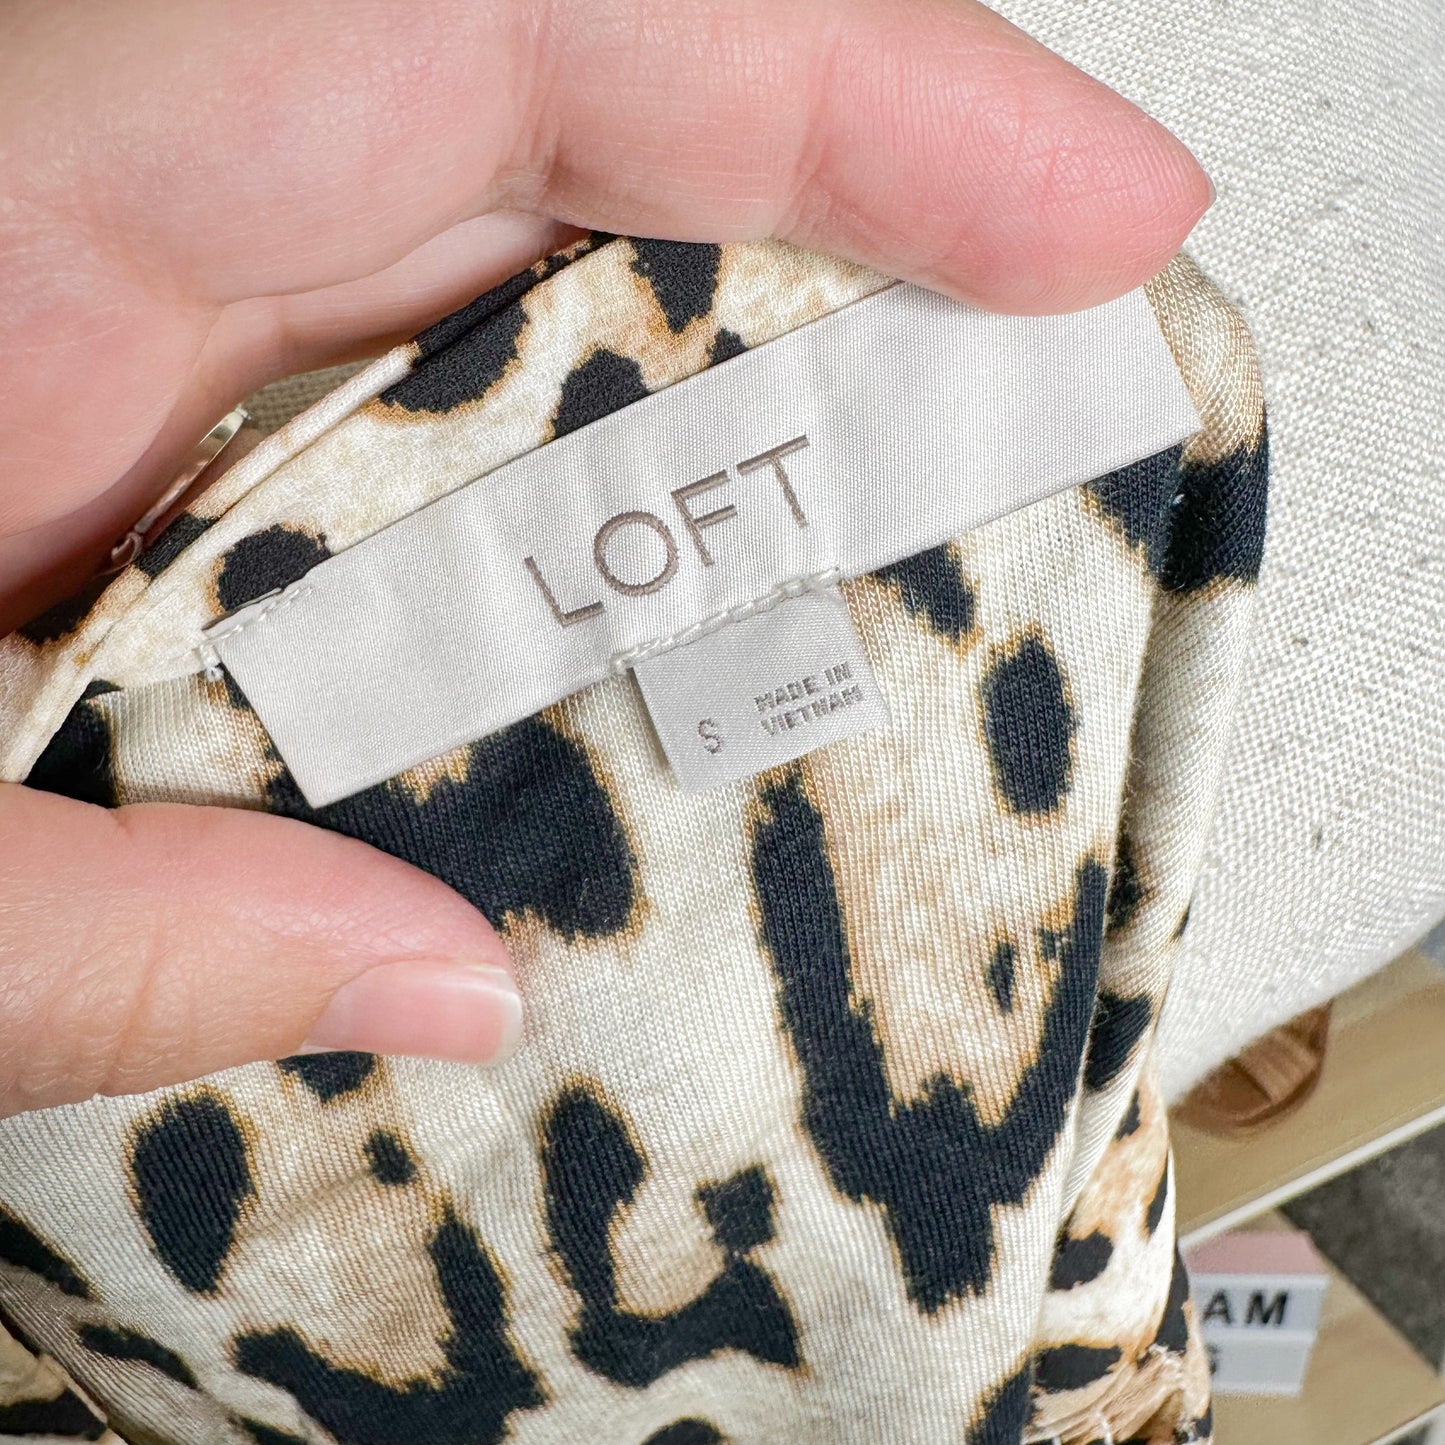 LOFT Leopard Print Smock Shell Sleeveless Blouse Size Small